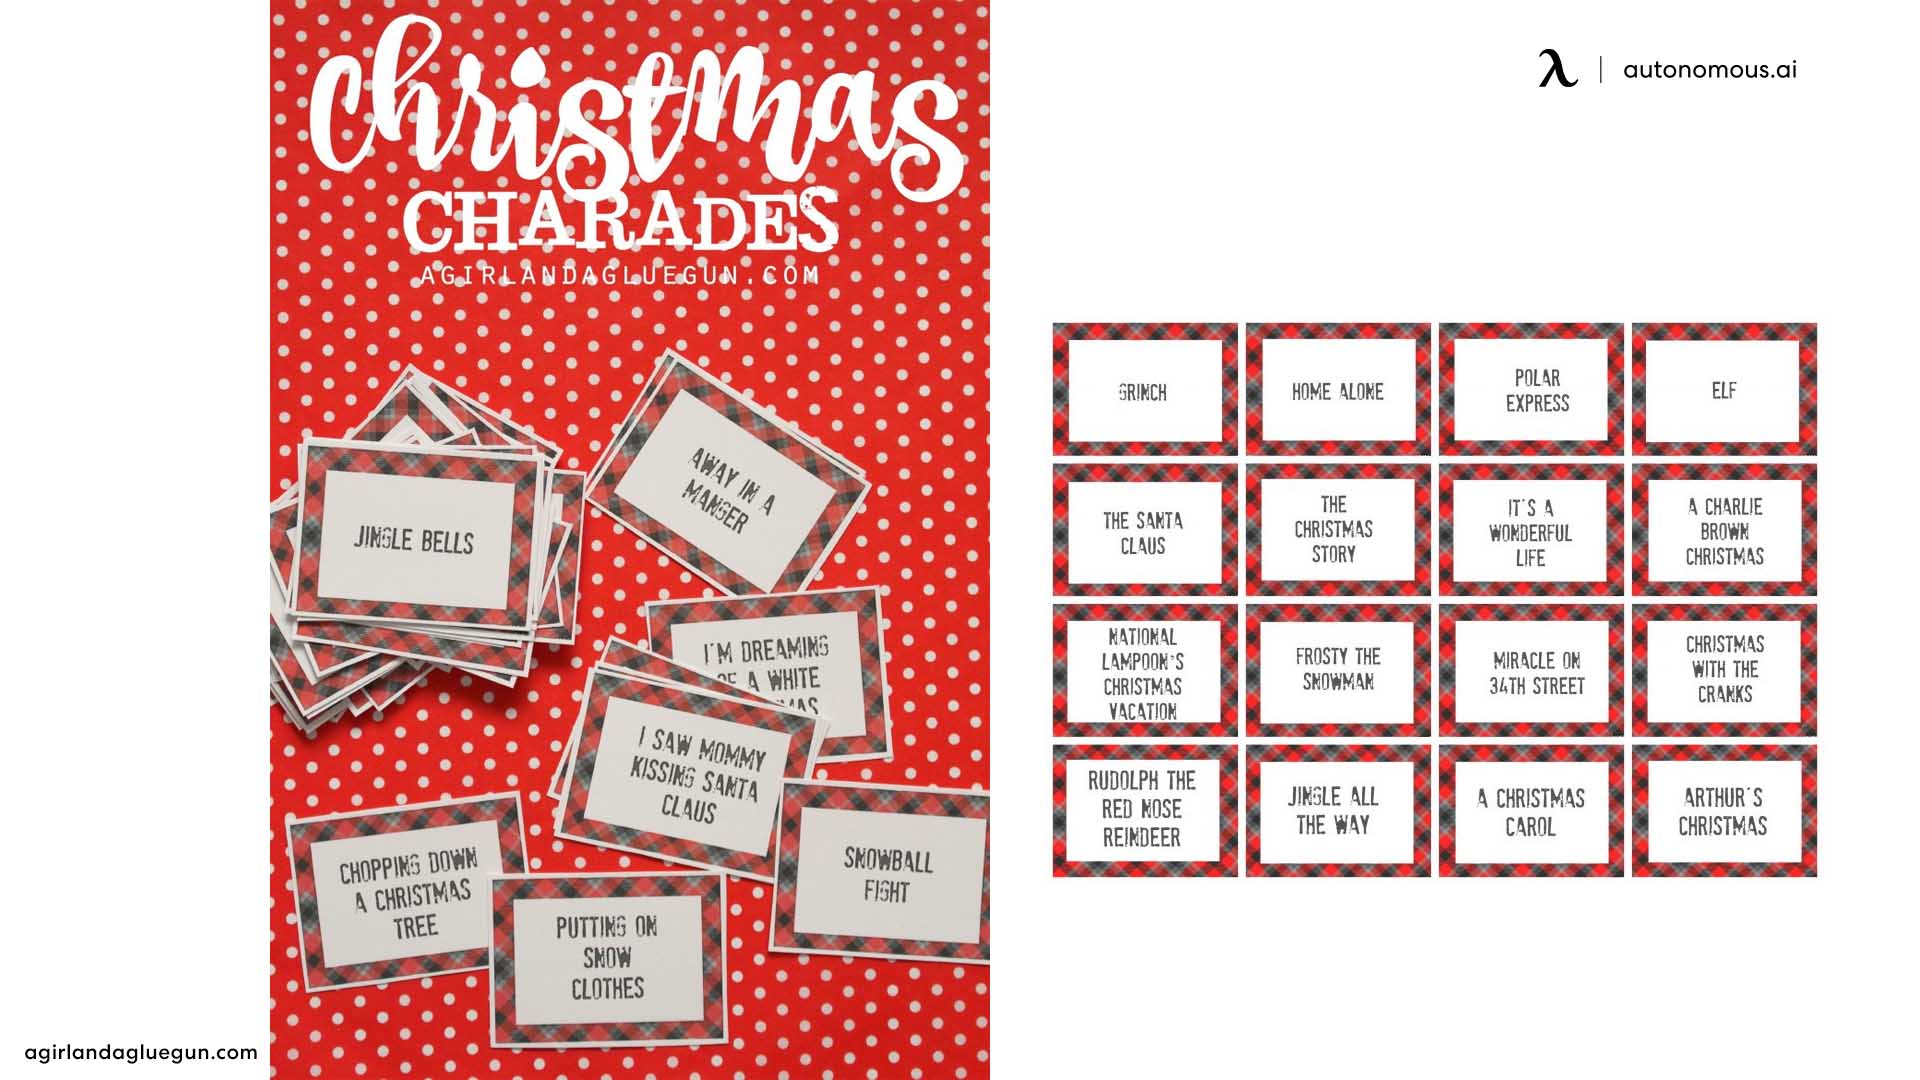 Holiday charades virtual christmas games for work